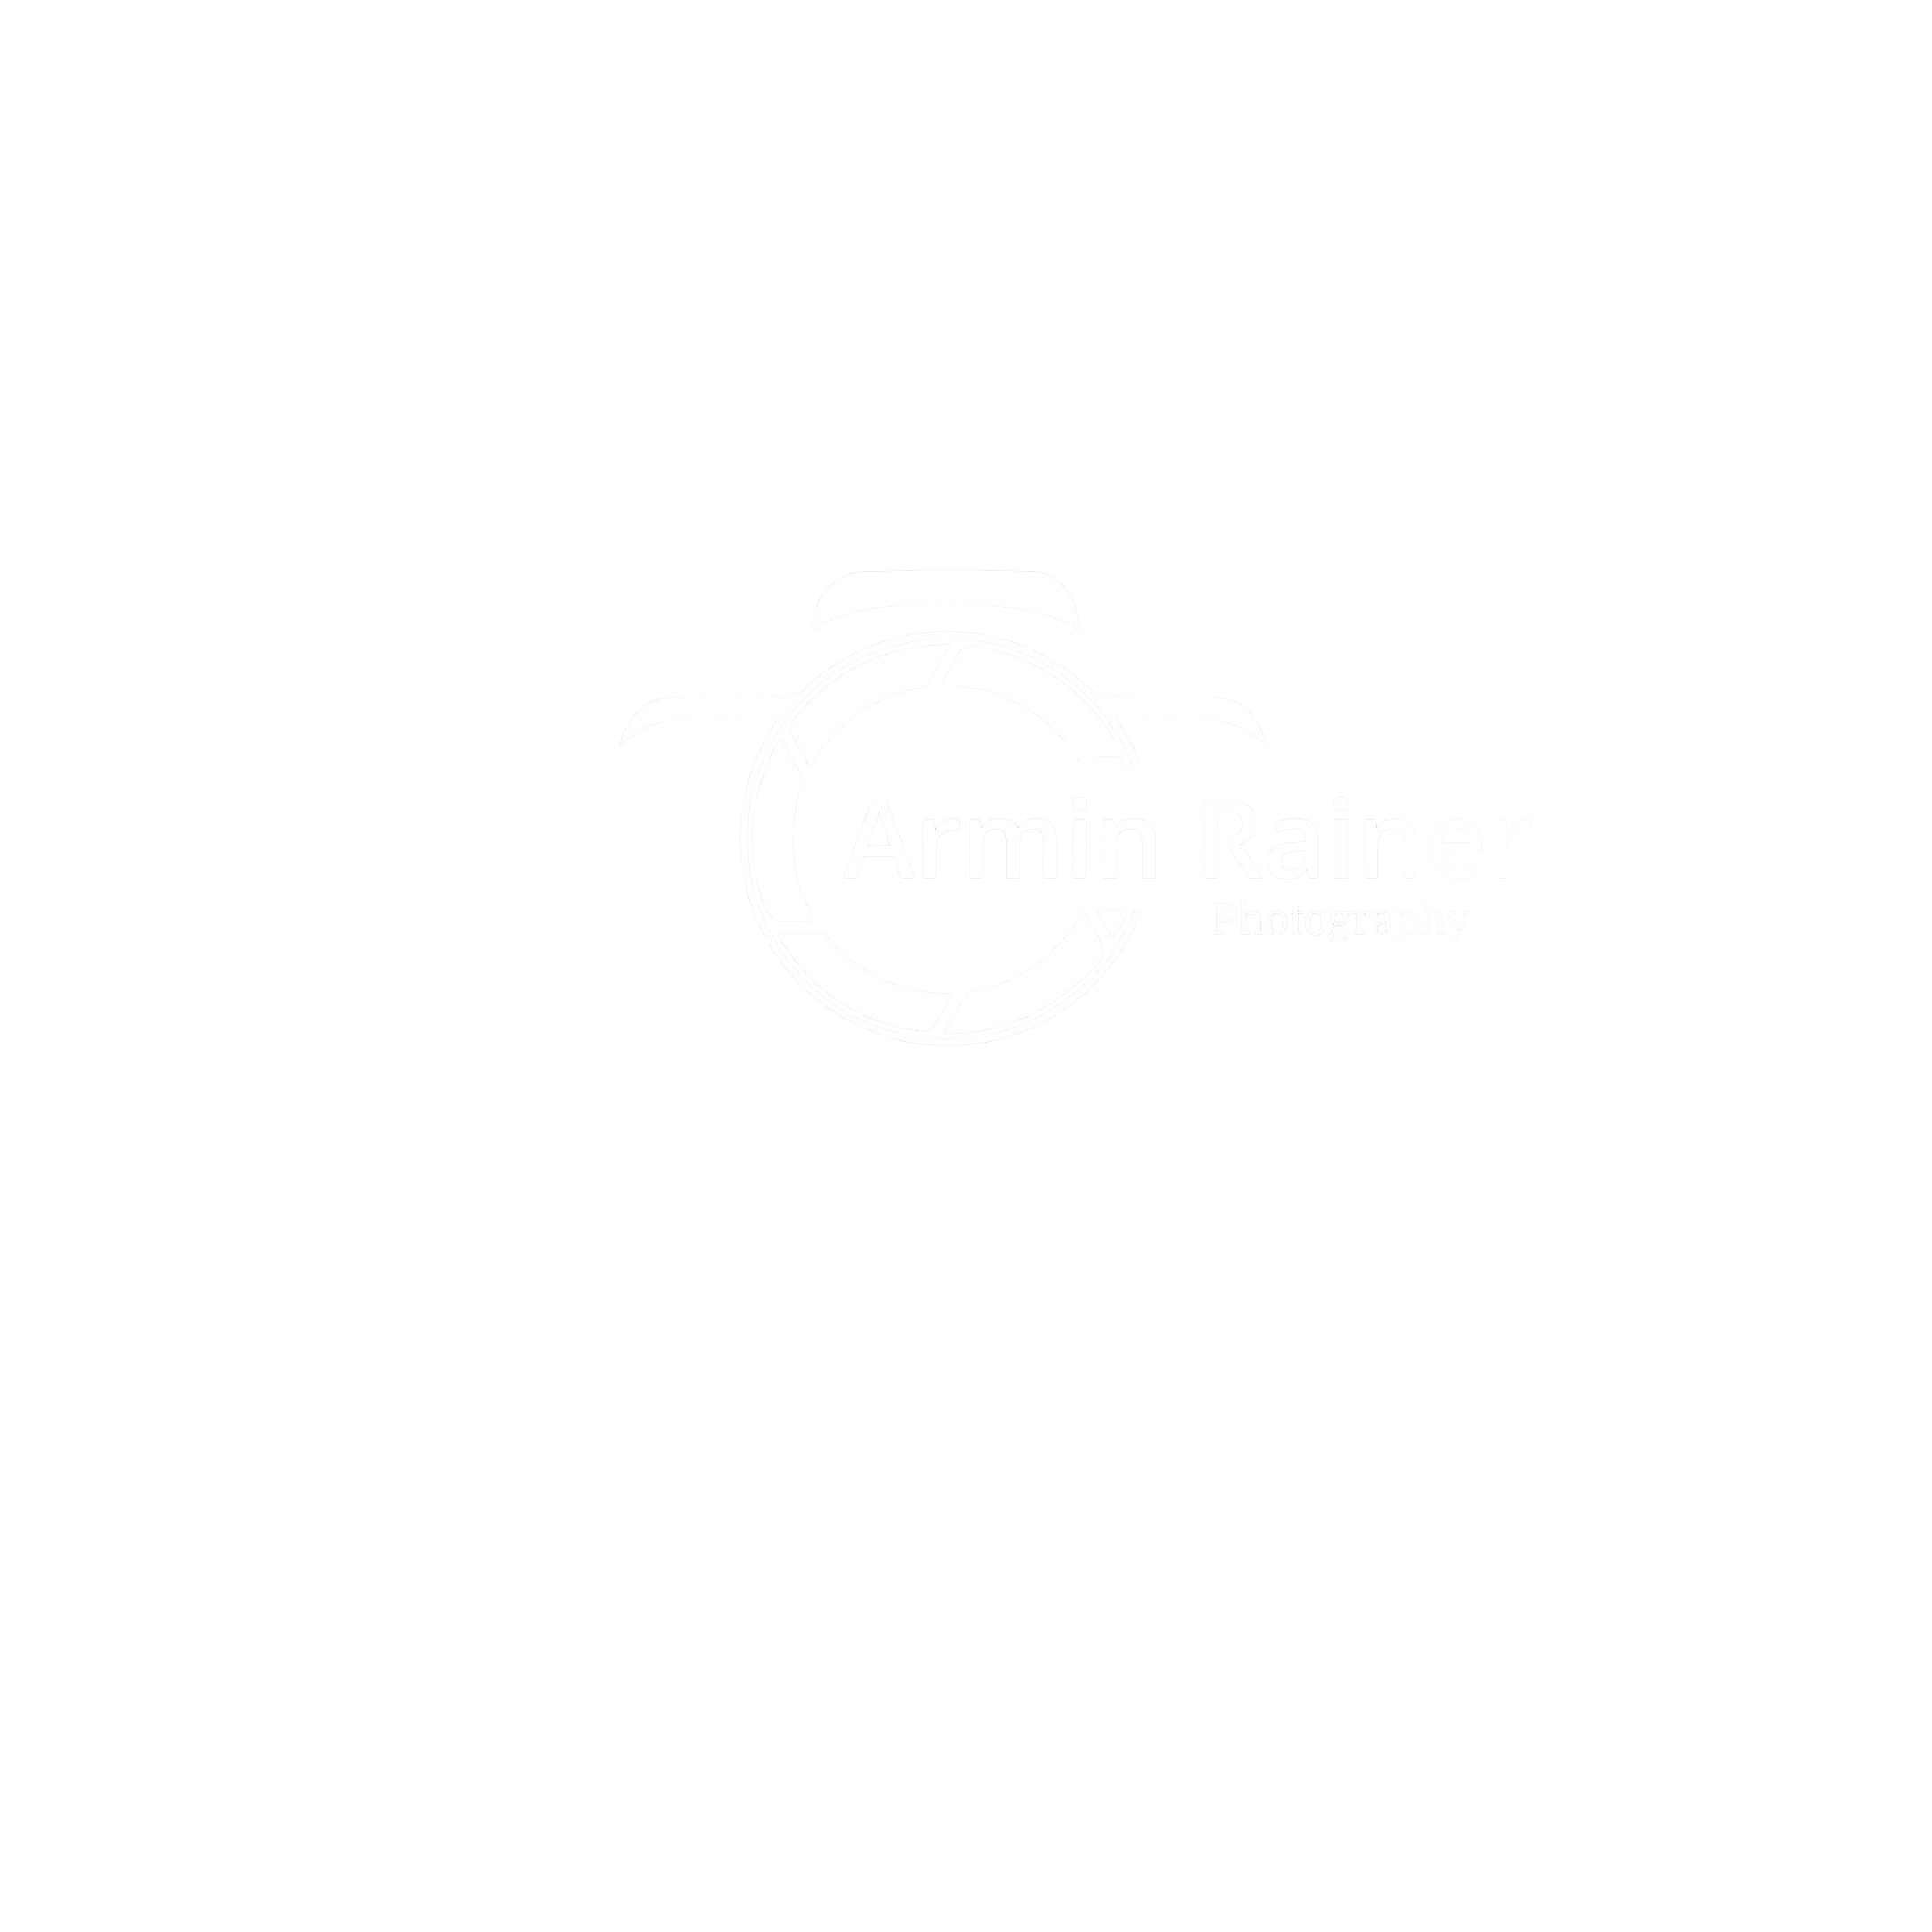 Armin Rainer Photography